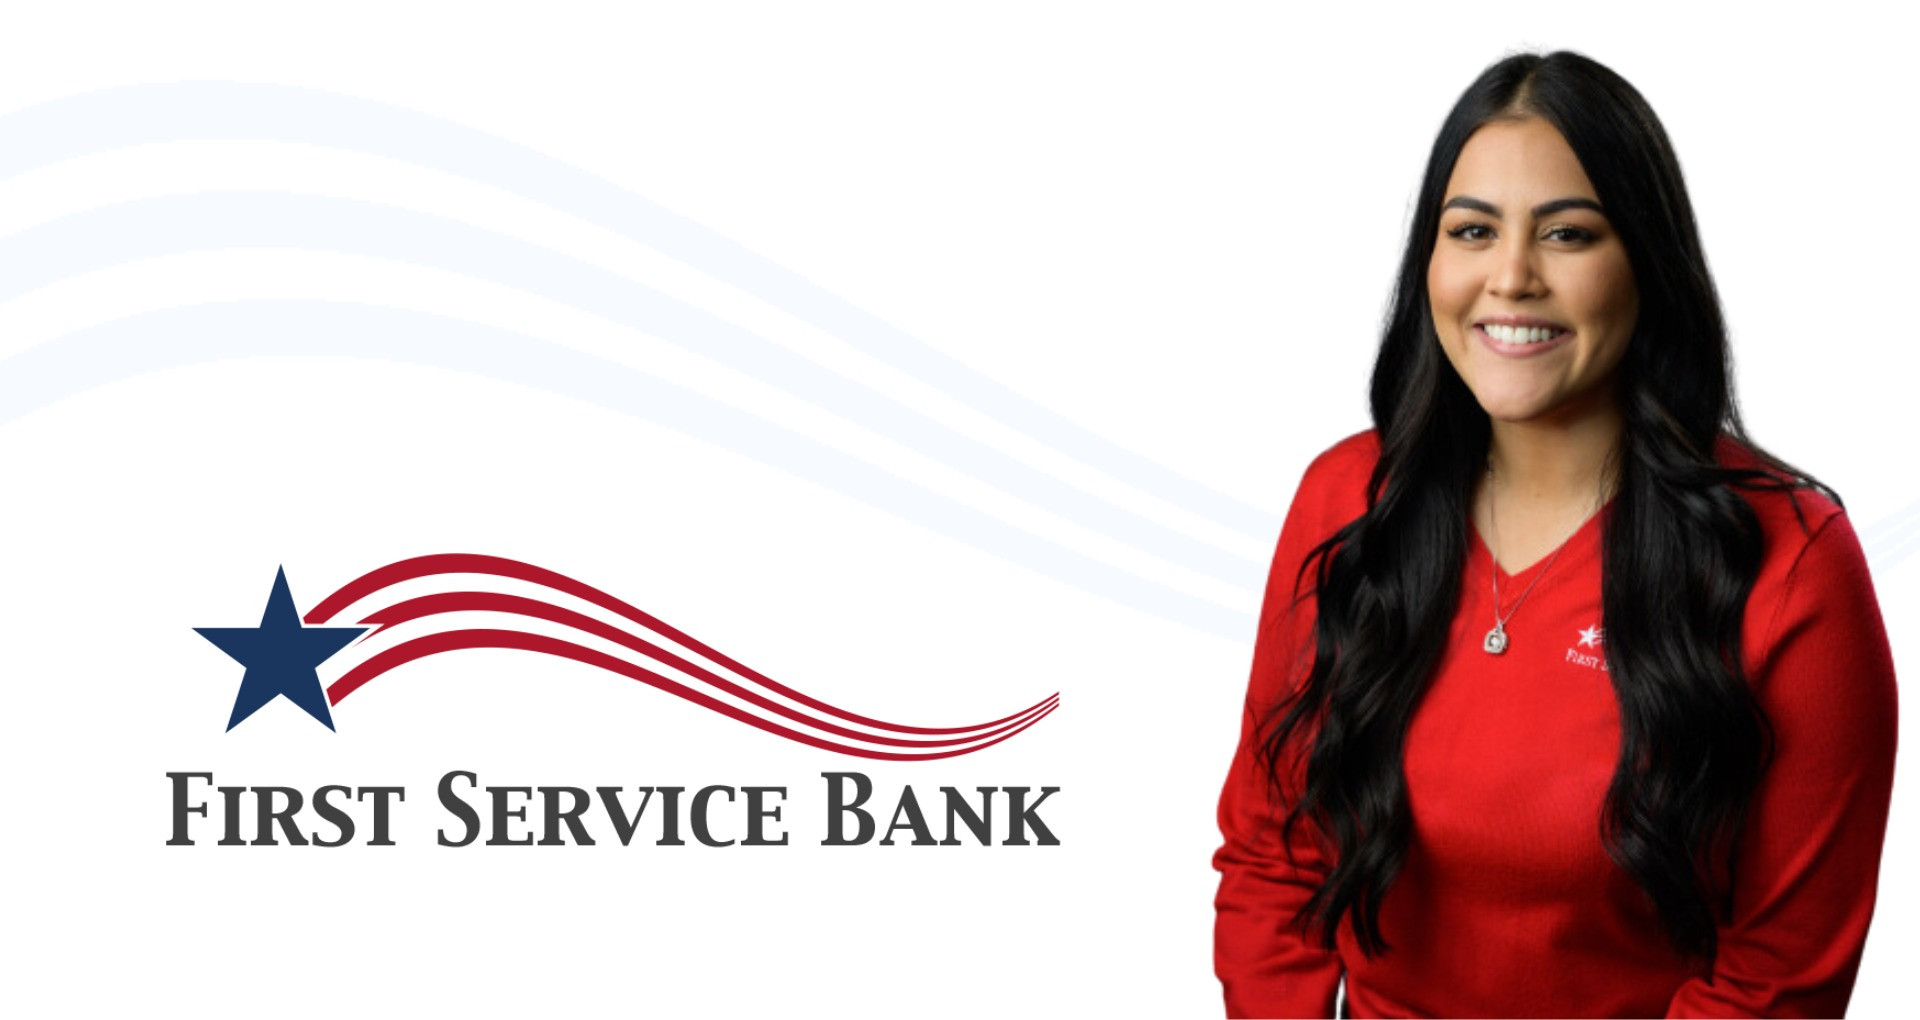 First Service Bank Appoints Jessica Baltodano as BSA Officer